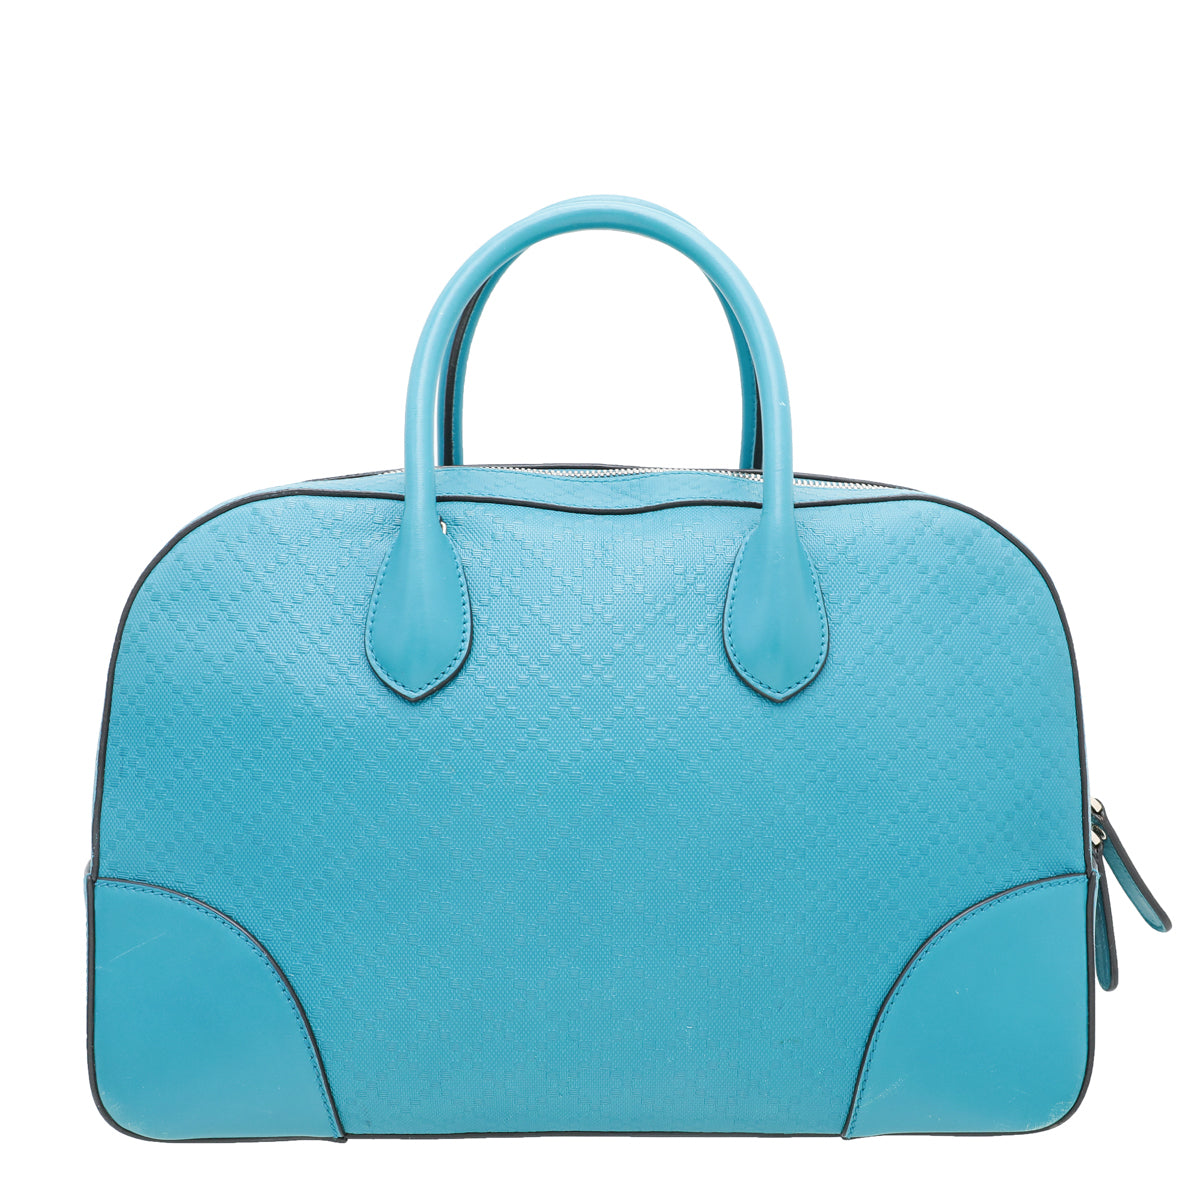 Gucci Turquoise Bright Diamante Top Handle Bag